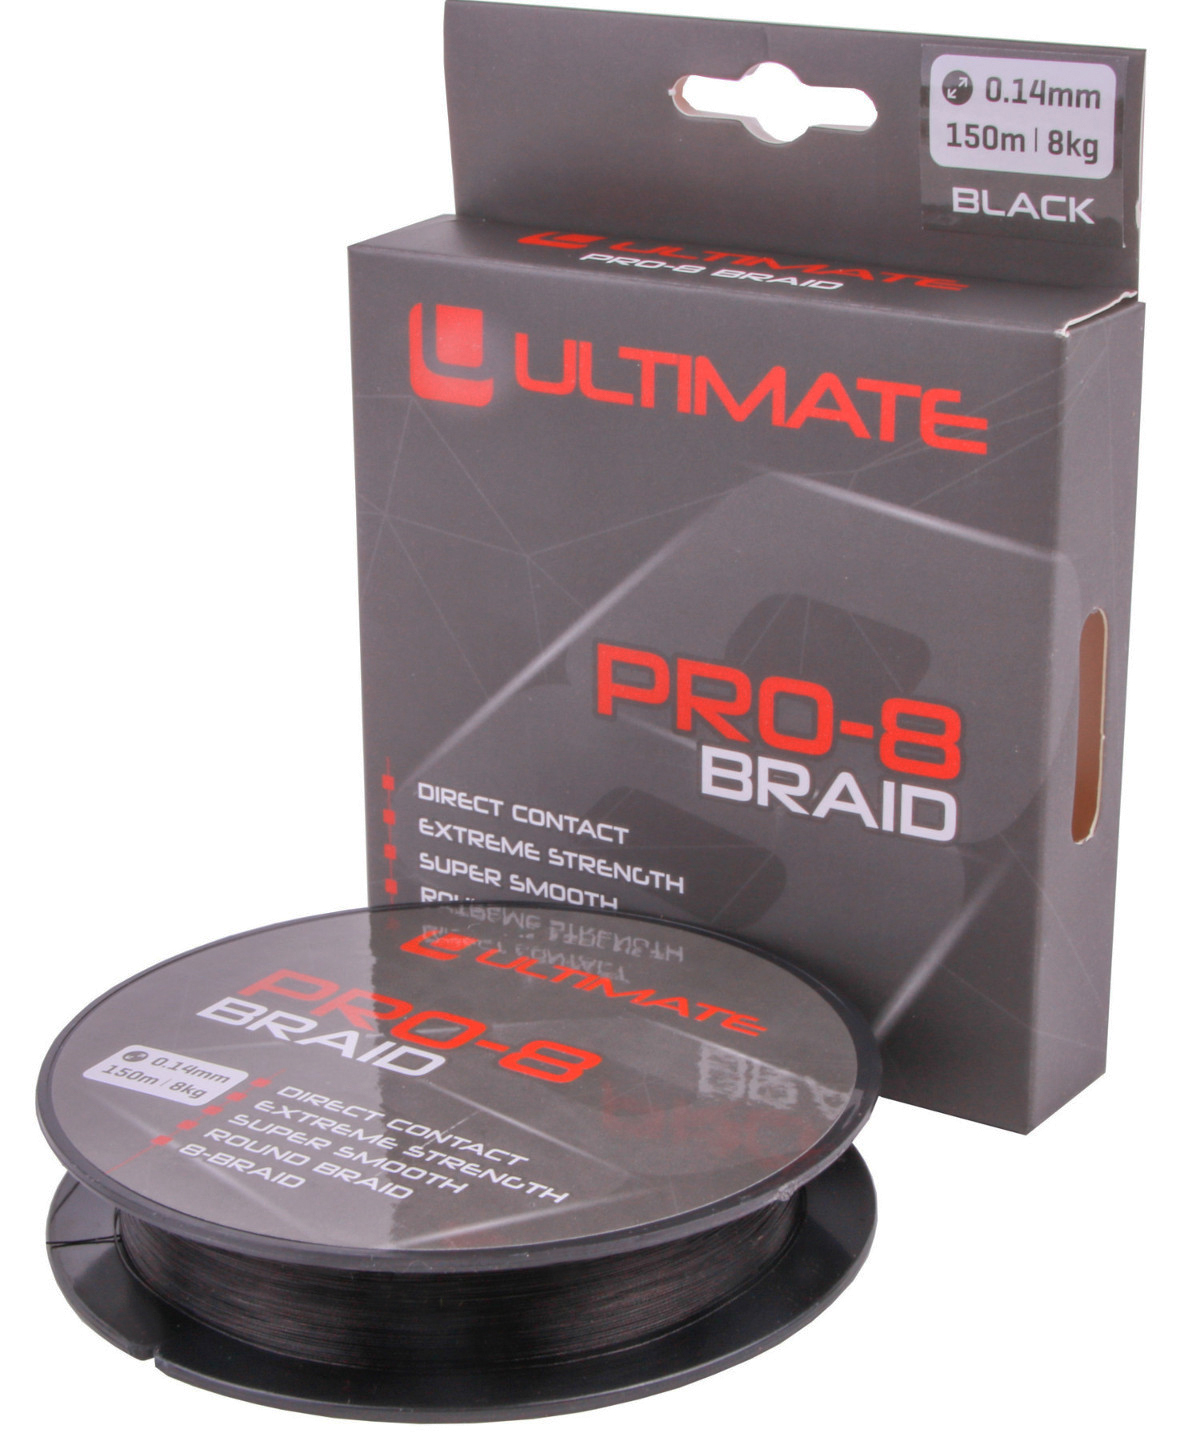 Ultimate Cast Special Light Set - Ultimate Pro-8 Braid